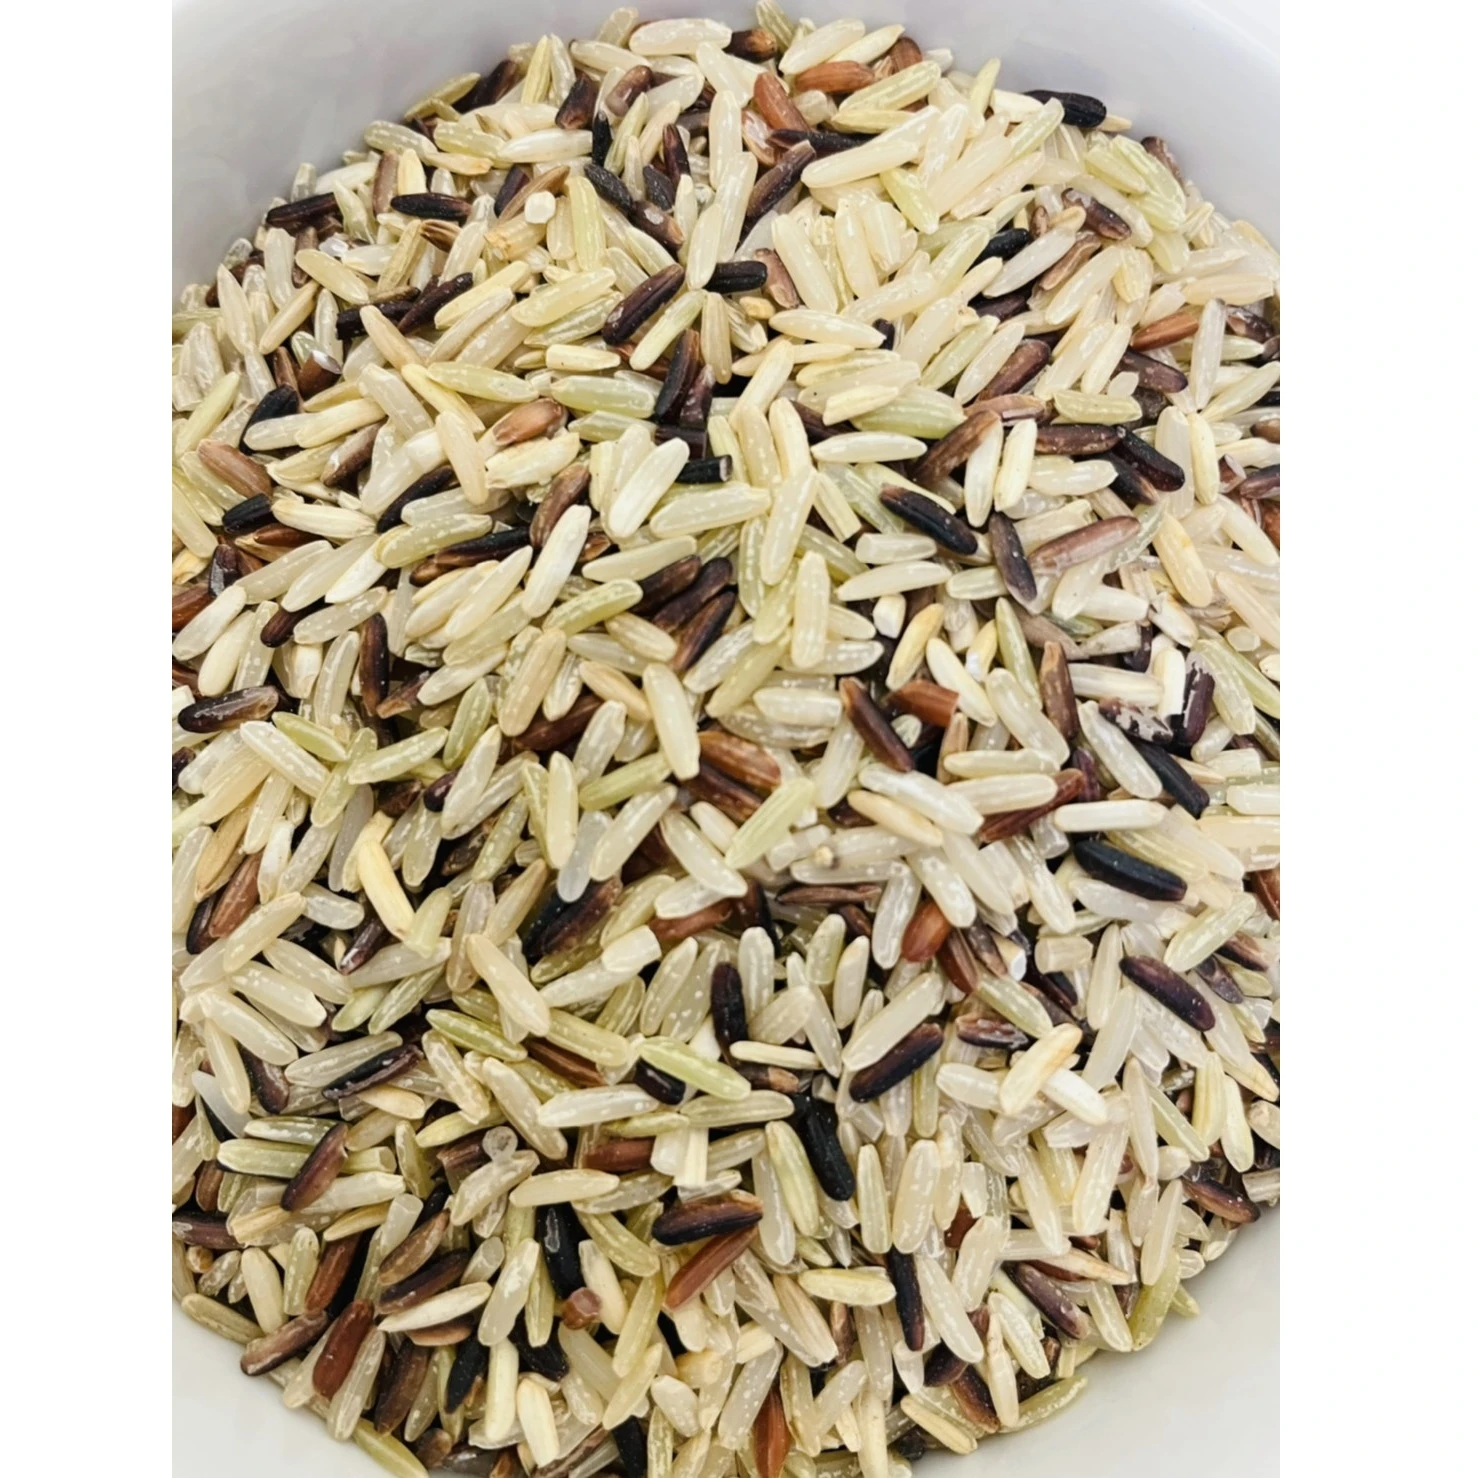 Certified Organic Color Sort Rejected Hom Mali Jasmine Rice Human Food Grade